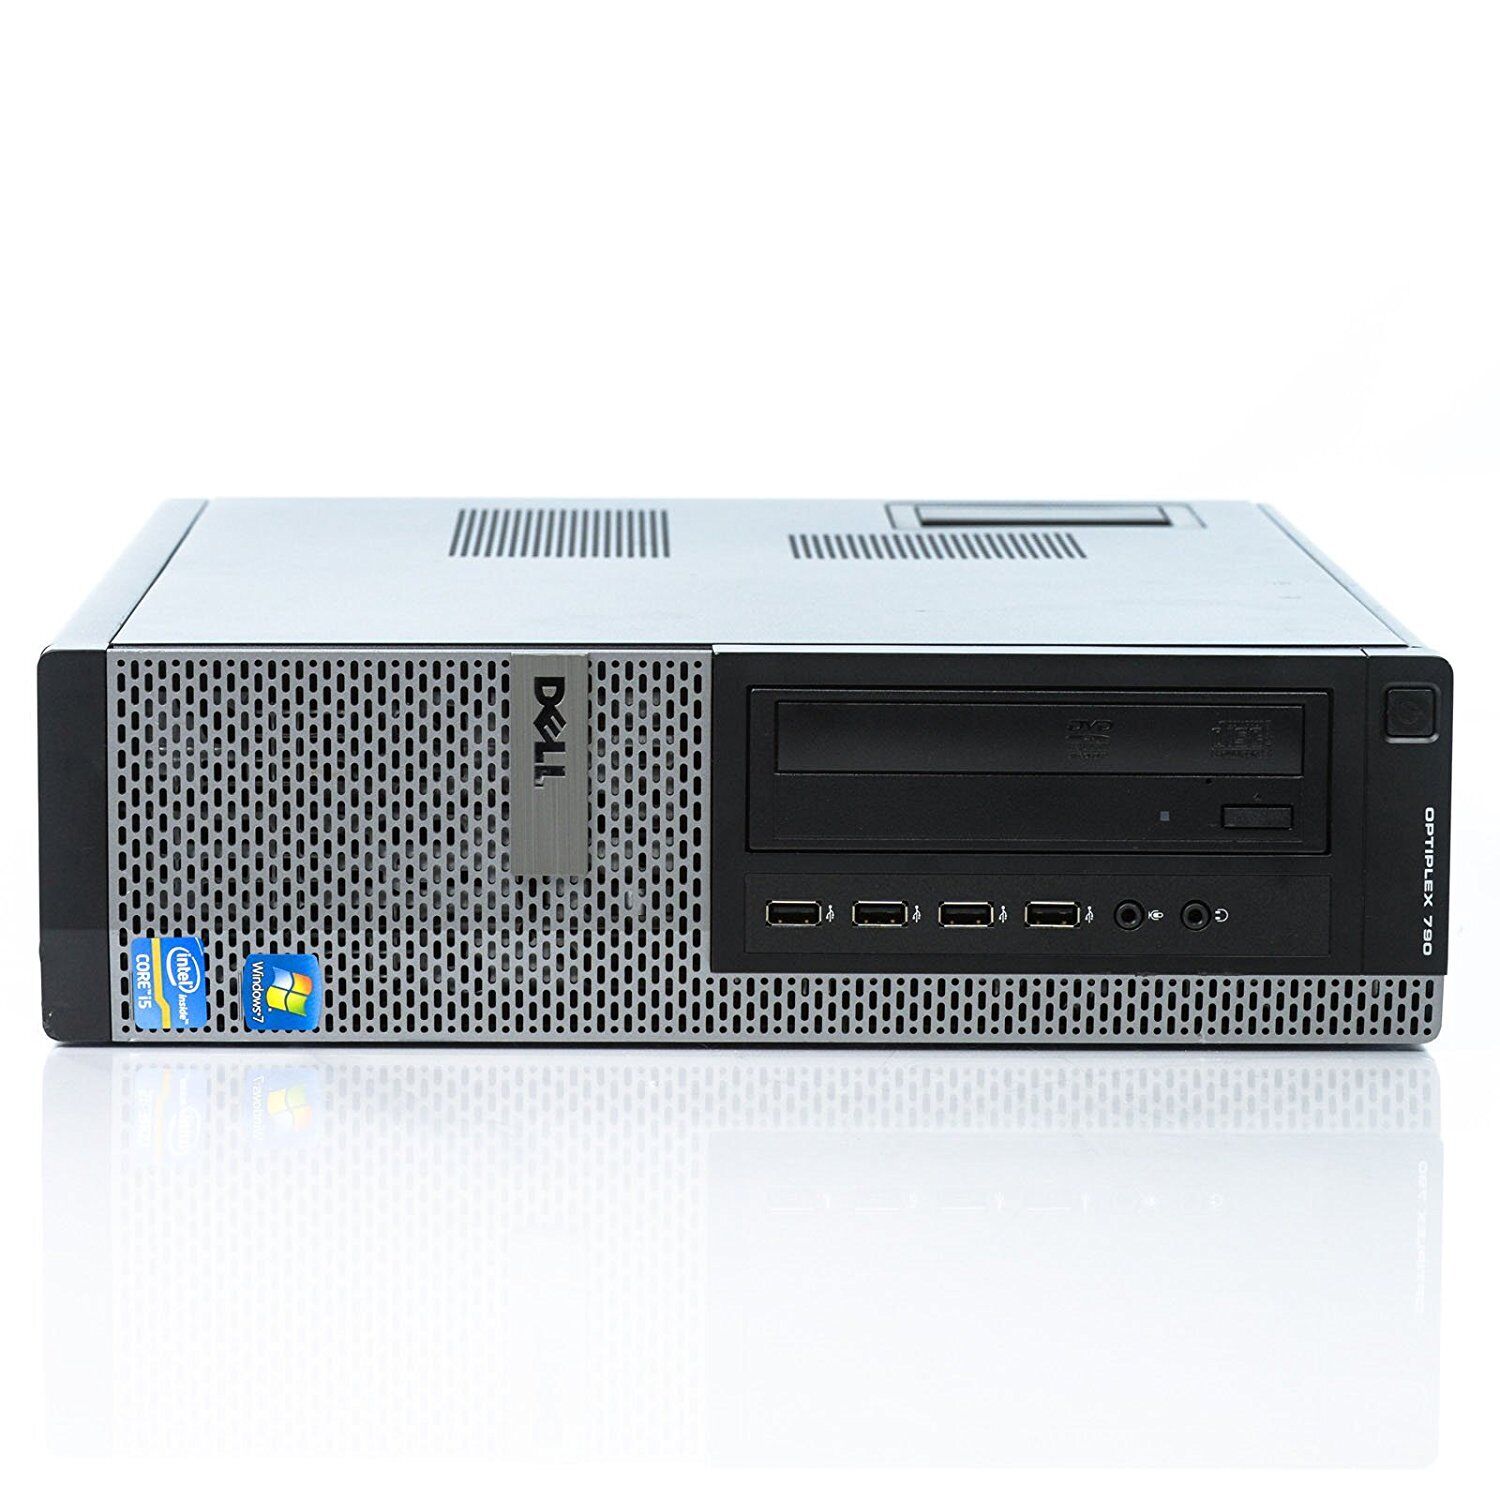 Customize Dell Optiplex 790 Desktop Computer with Windows 7 x64bit Home or Pro